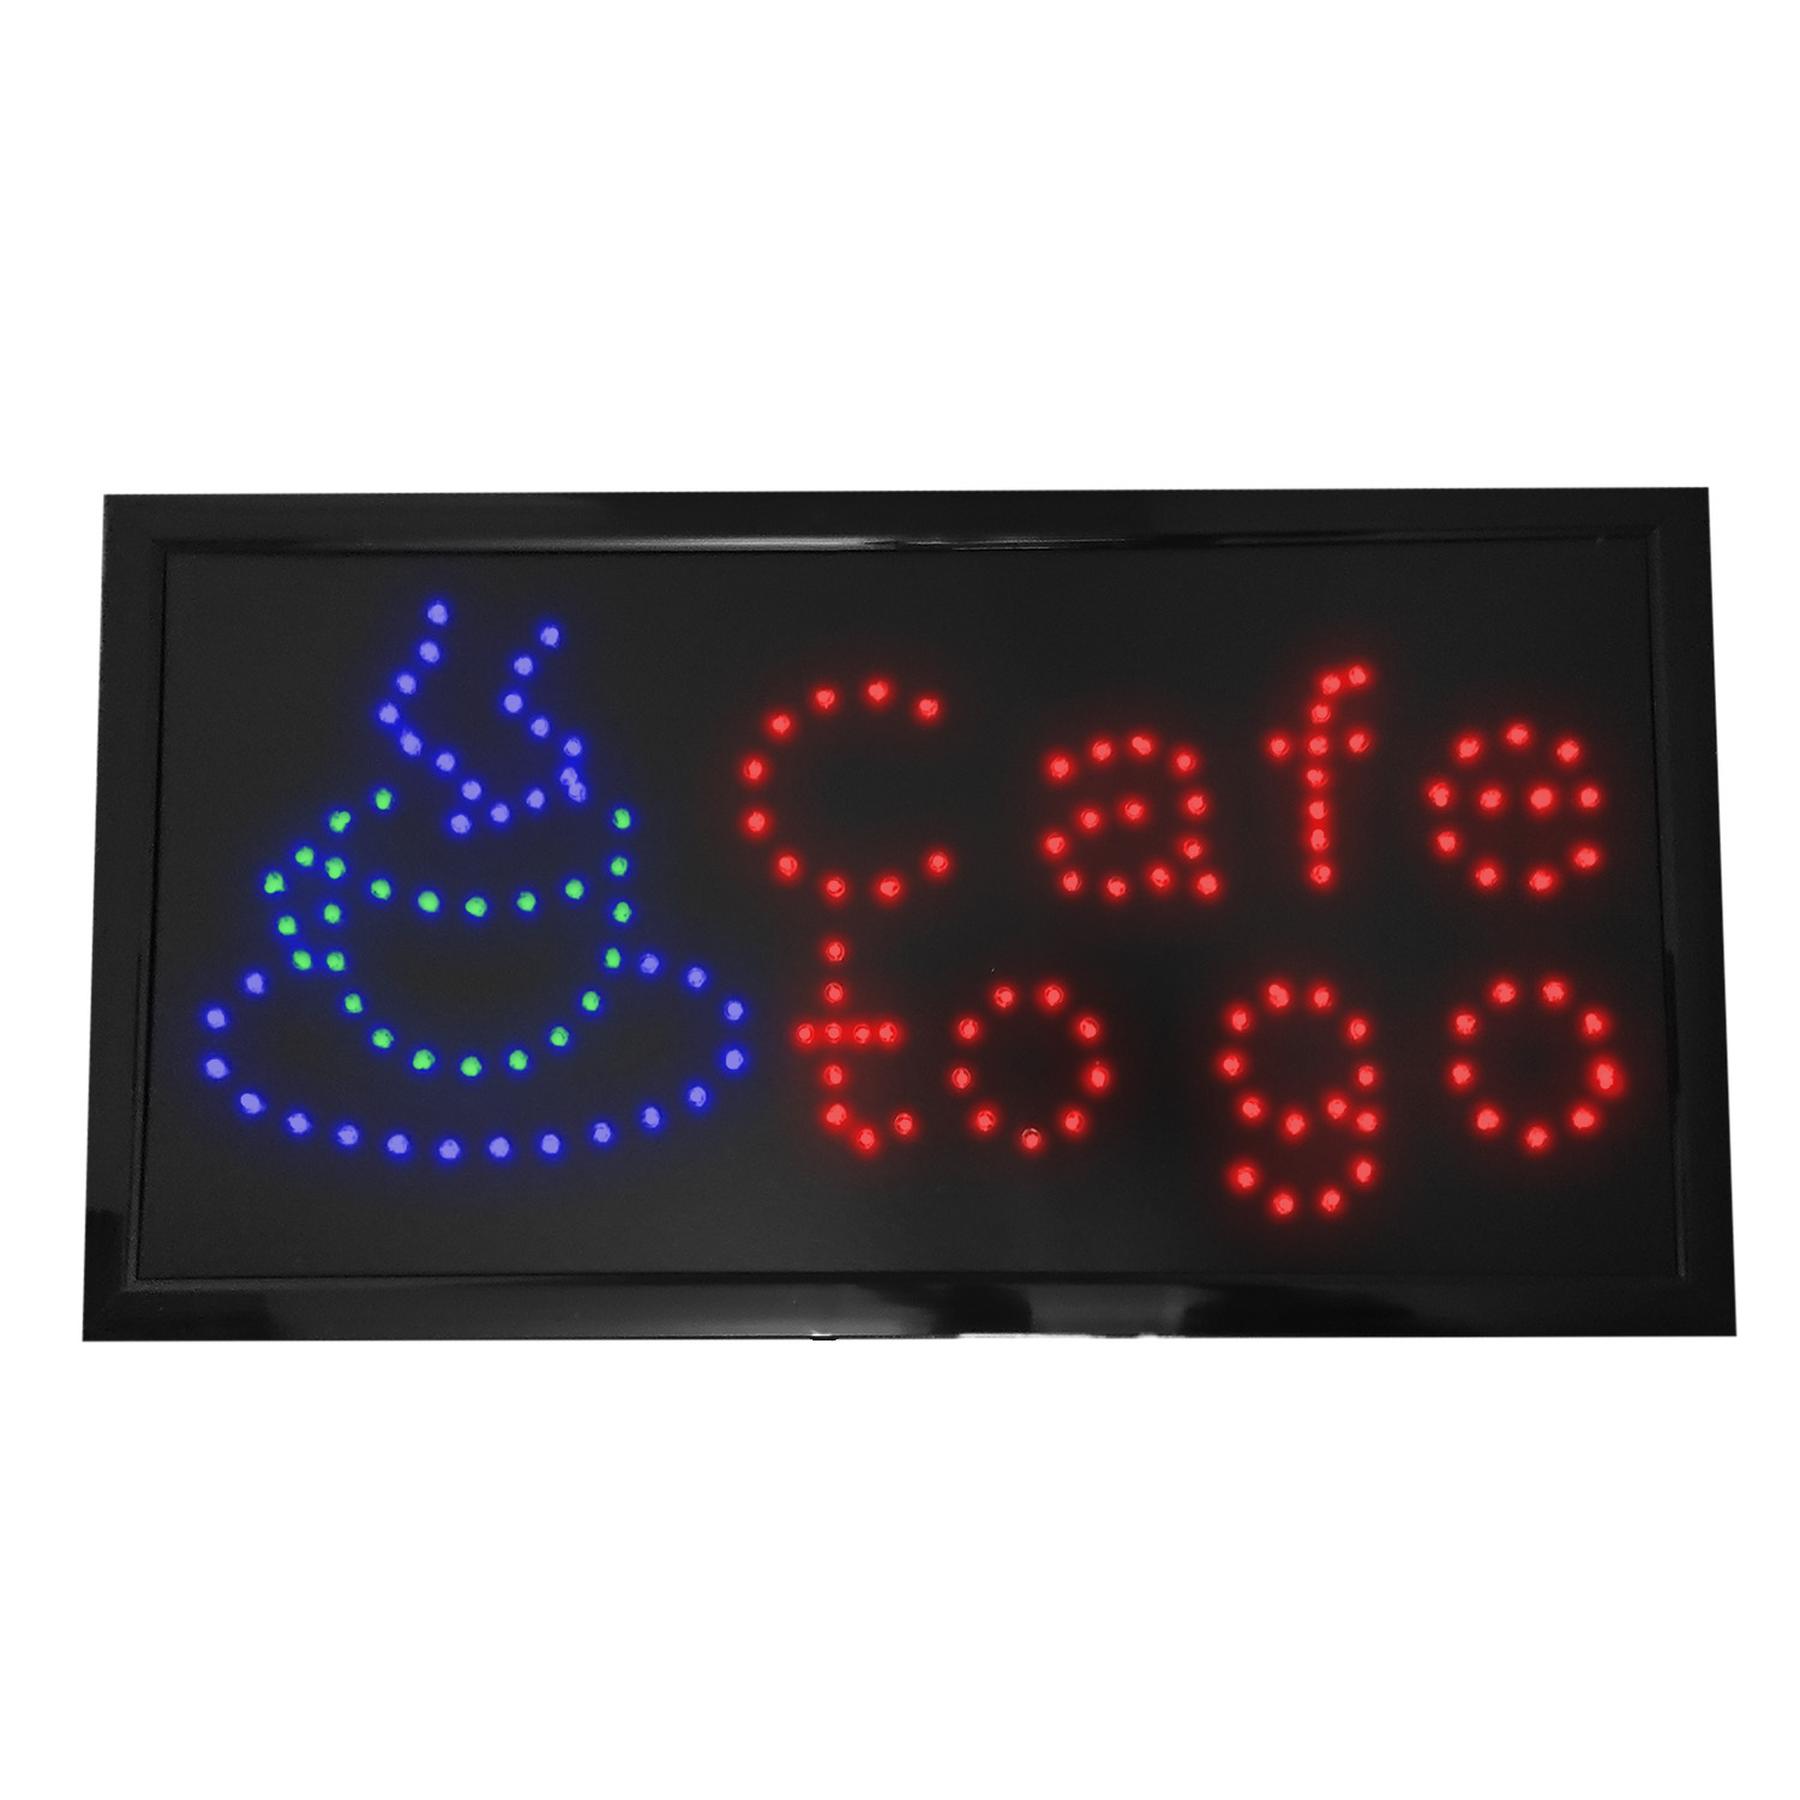 LED Reklame Leuchtschild, 48 x 25 cm, Coffee to go, rot blau orange